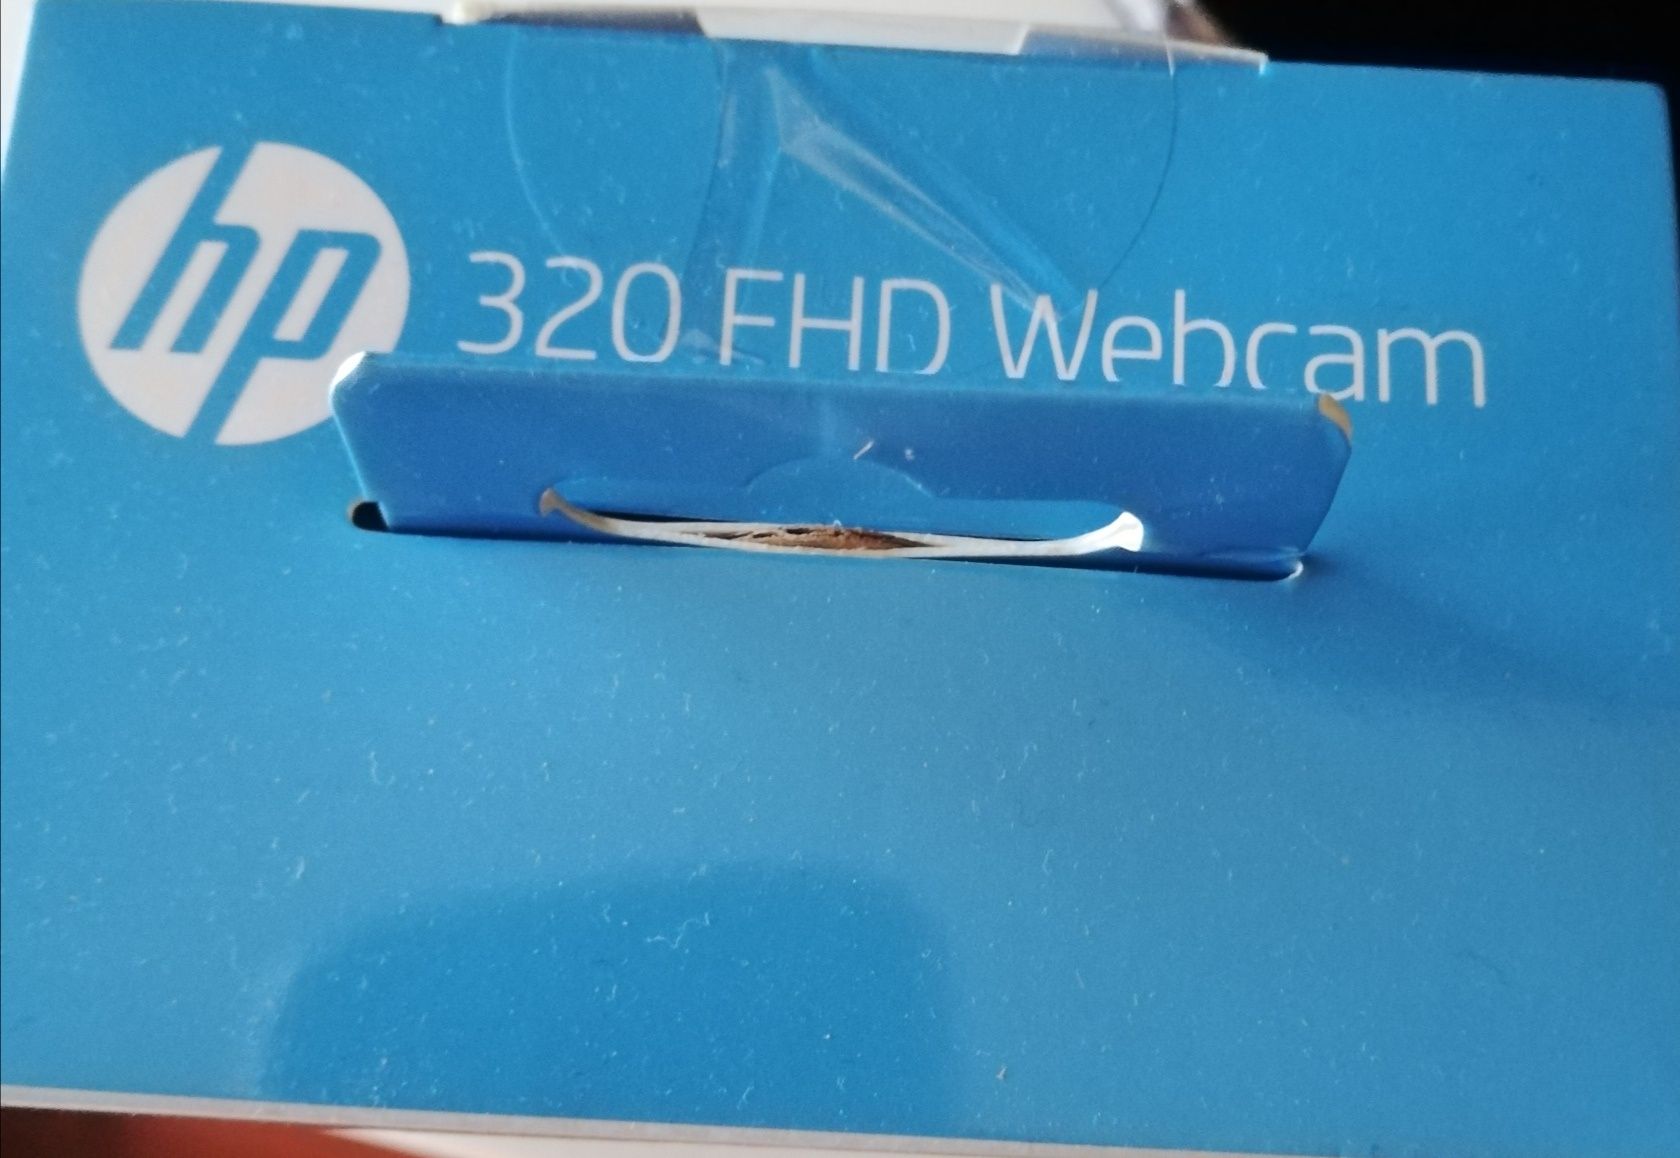 Web camera HP 320 FHD